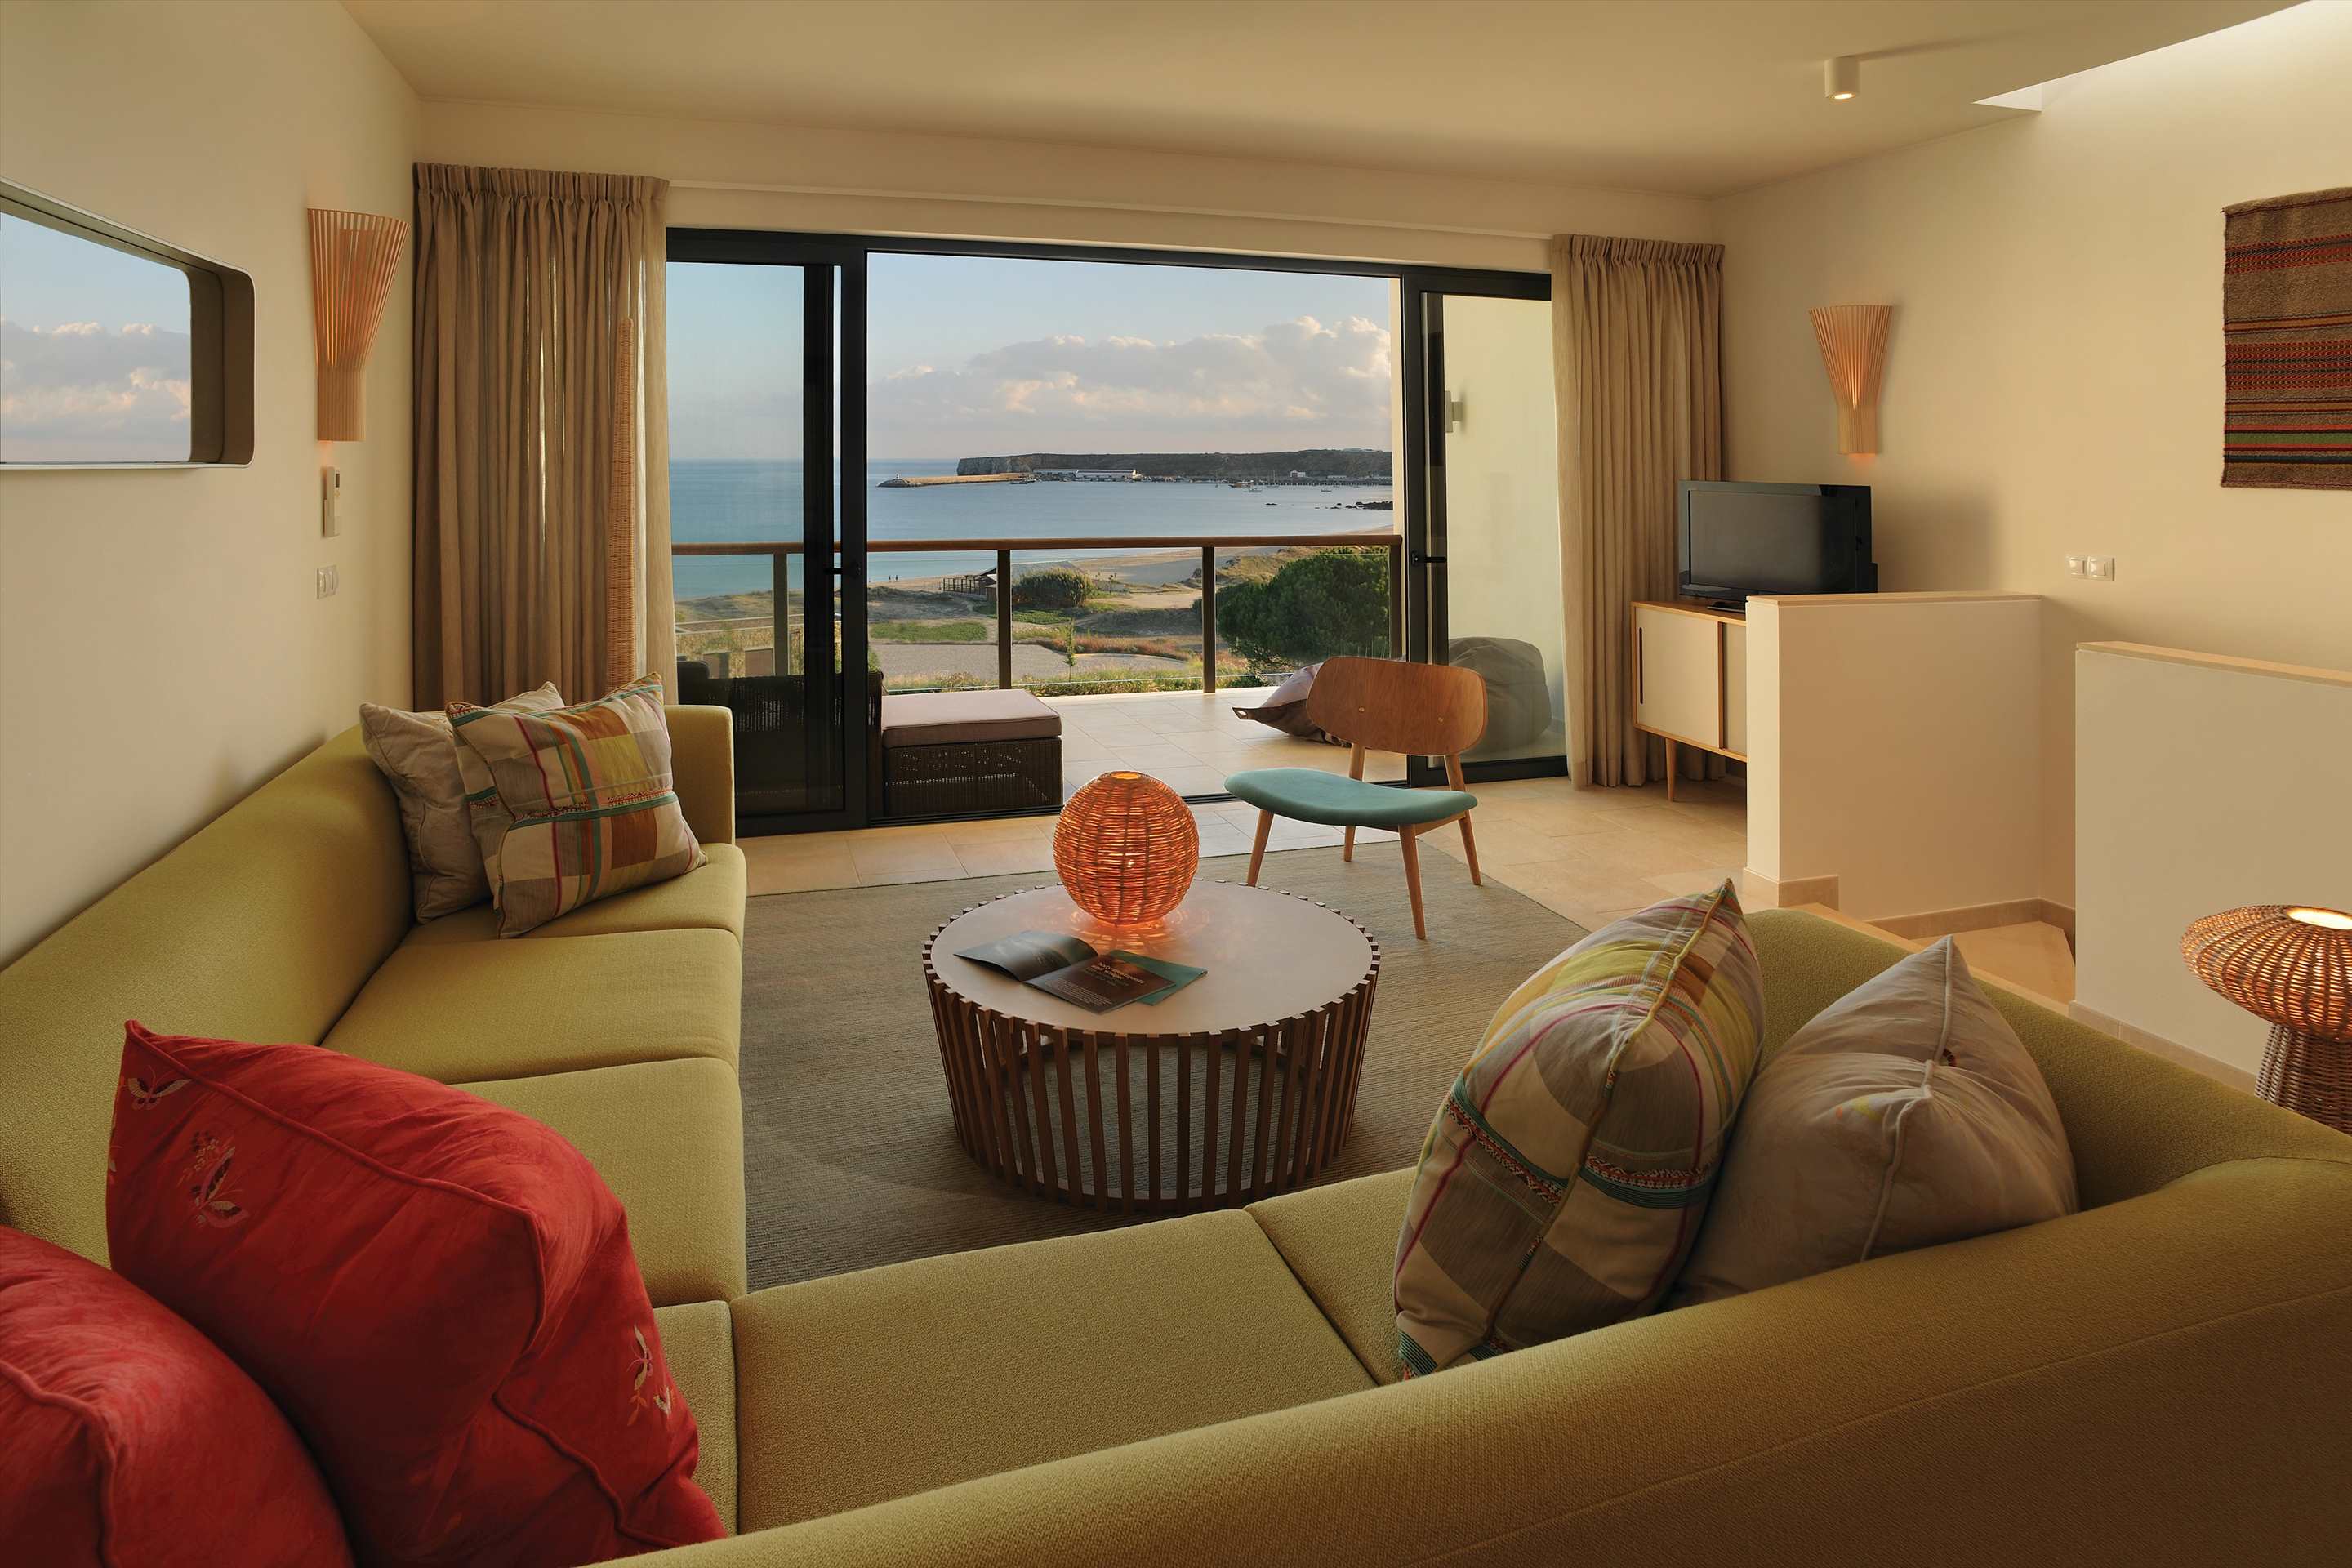 Martinhal Village Ocean House, full ocean view, Grand Deluxe Two Bedroom, 2 bedroom villa in Martinhal Sagres, Algarve Photo #1